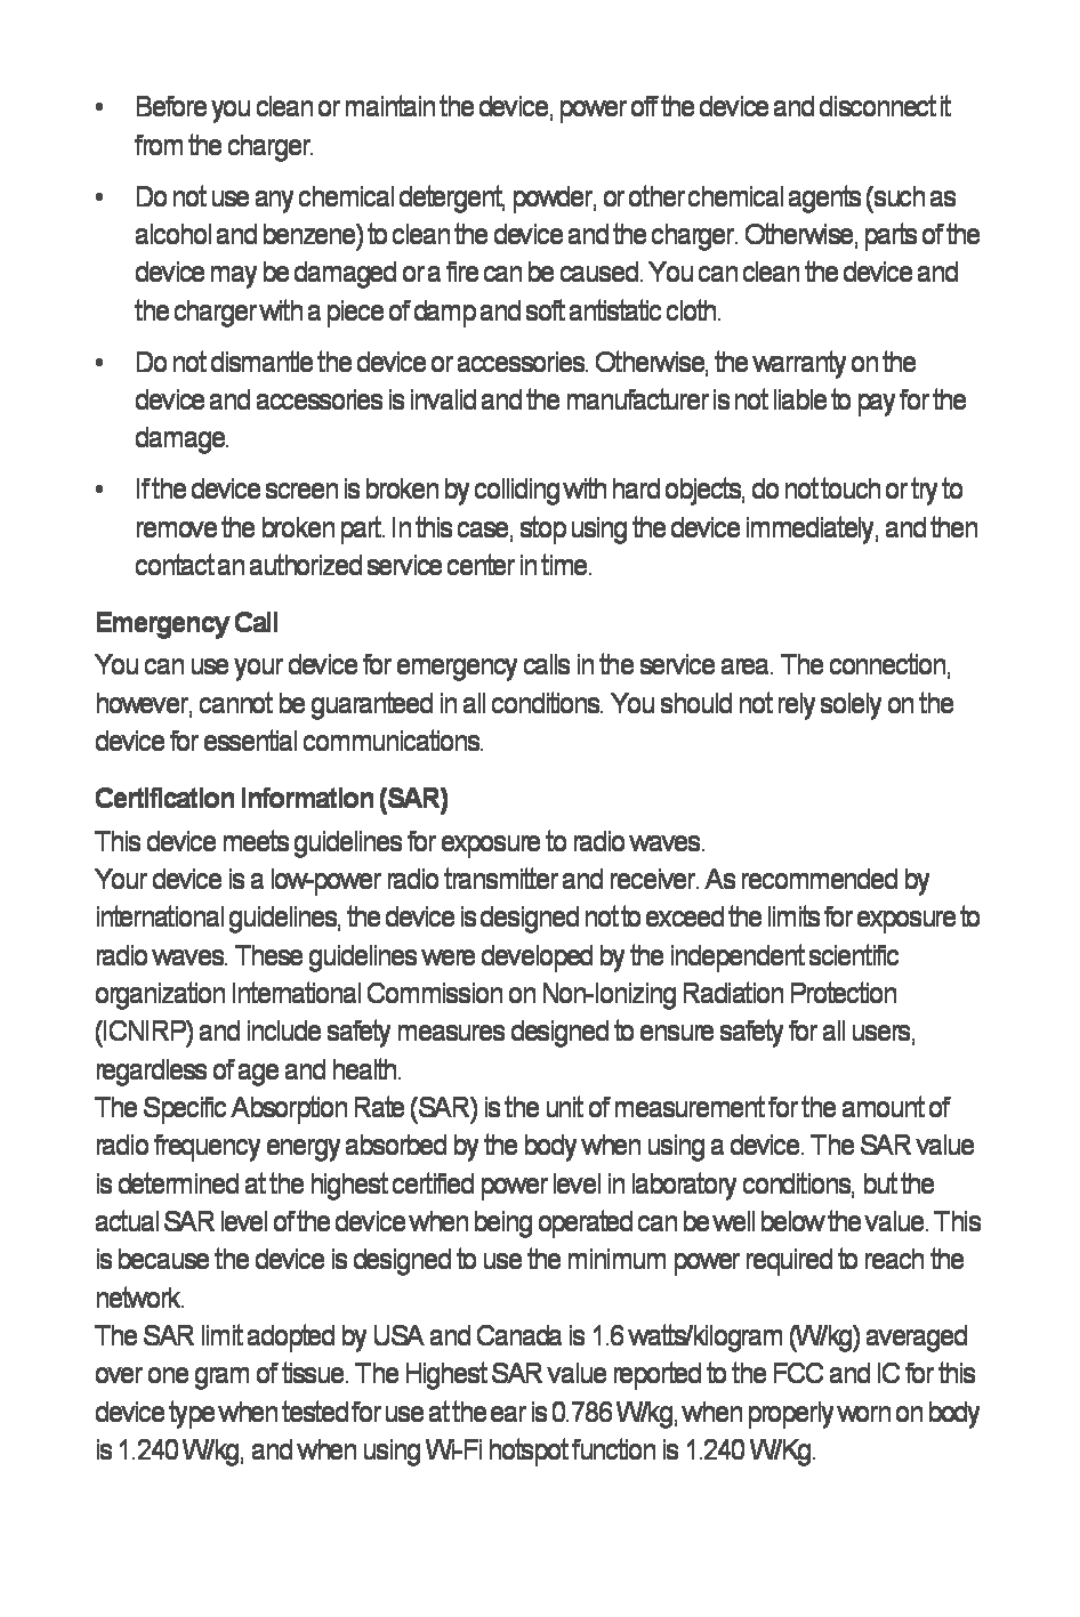 Huawei M866 quick start Emergency Call, Certification Information SAR 